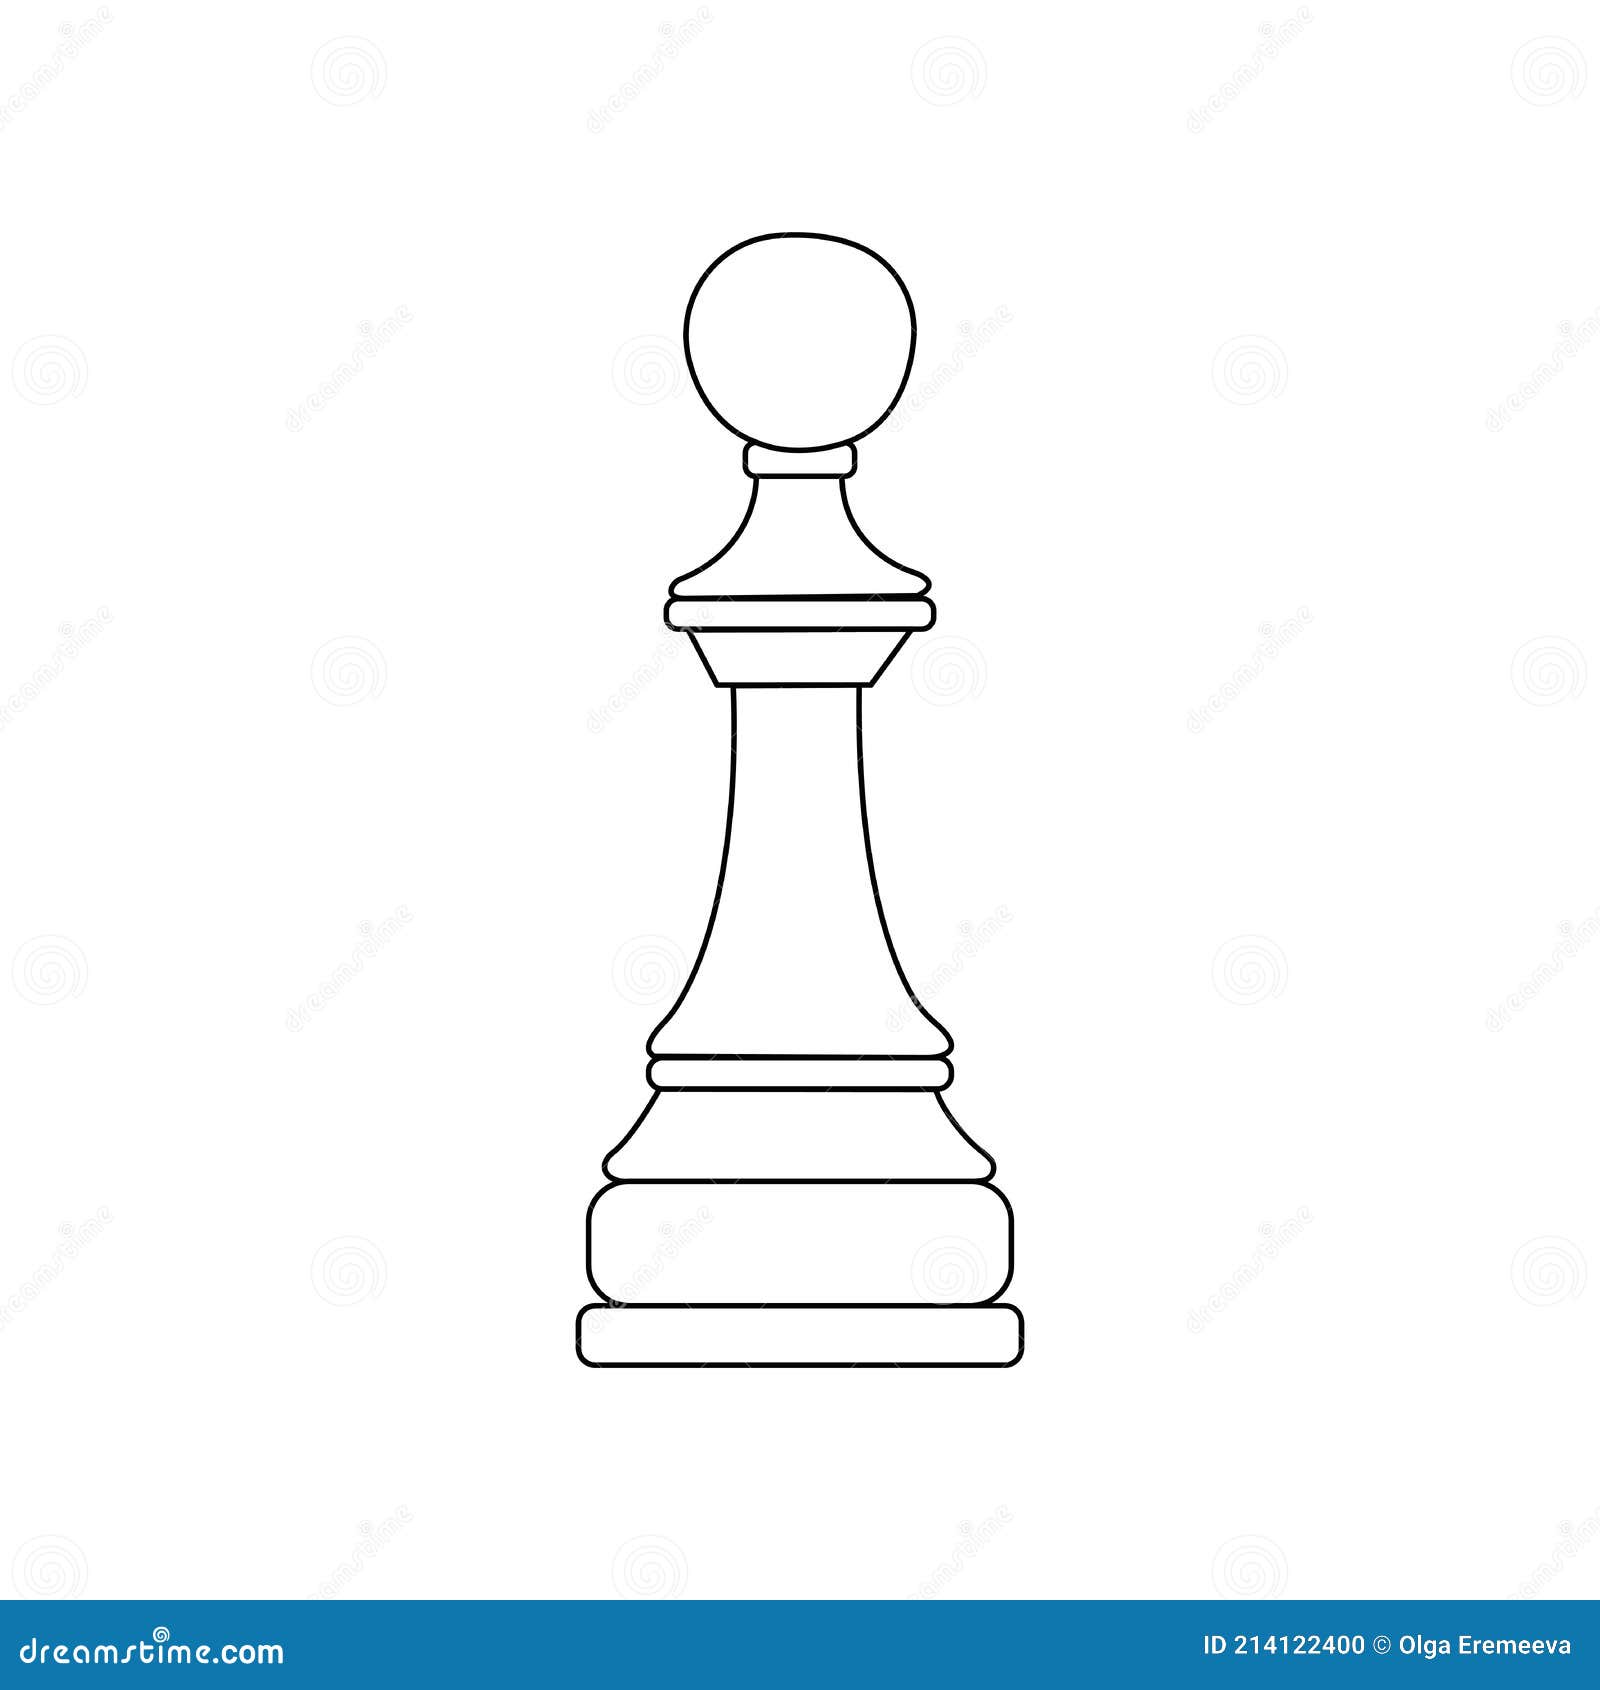 peça de xadrez peão. vetor contorno isolado preto e branco 18863541 Vetor  no Vecteezy